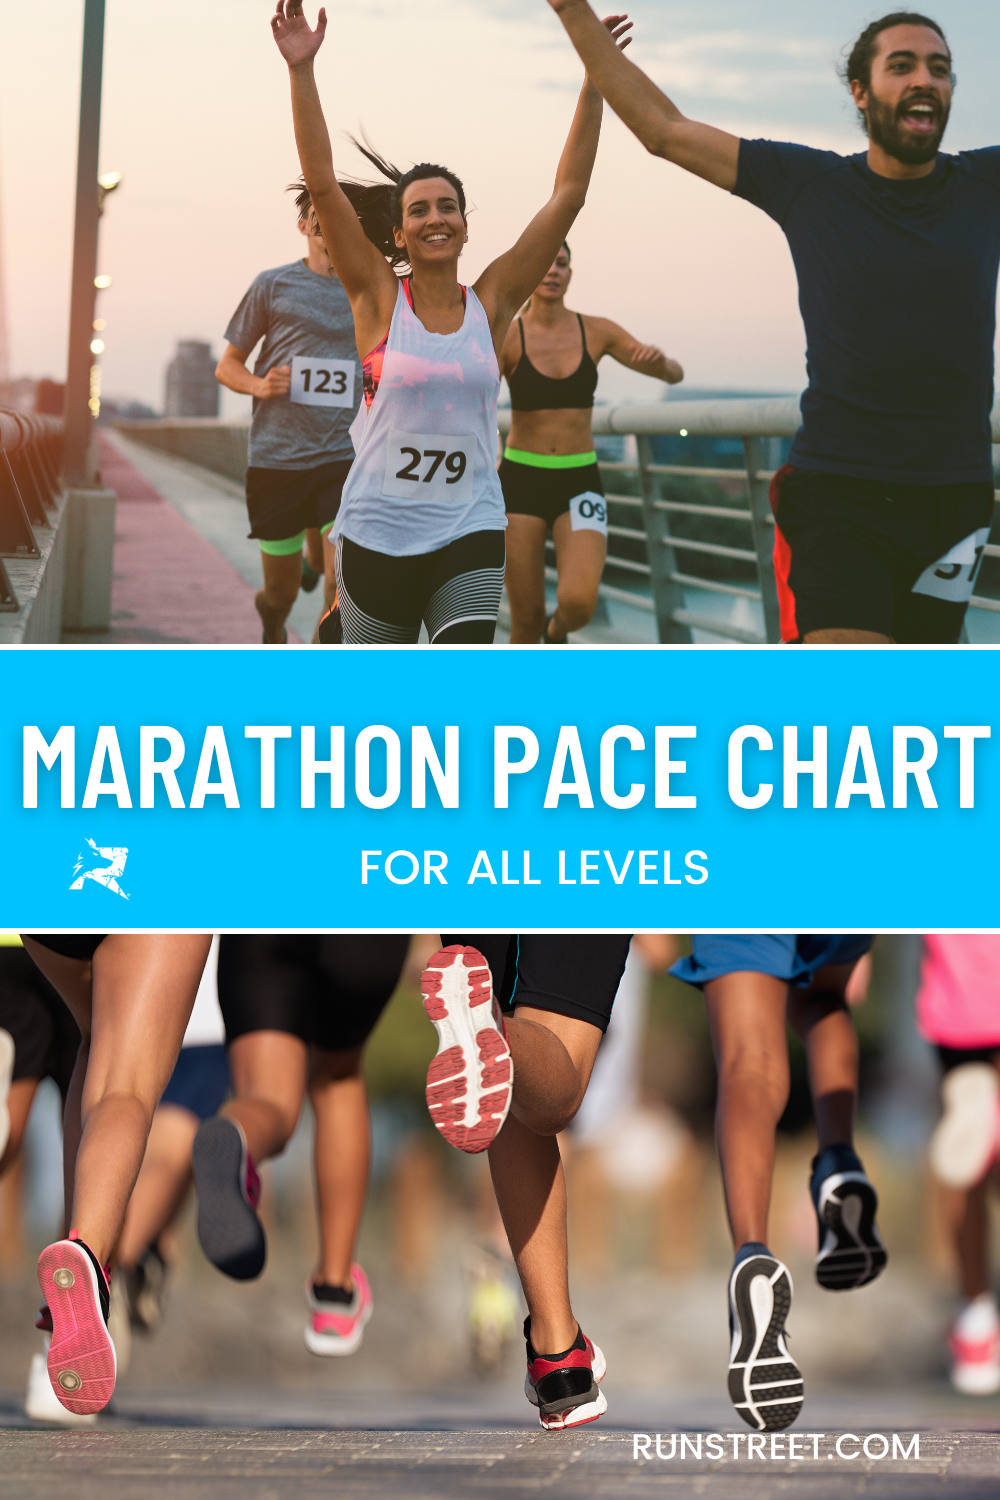 Pace Calculator - Off to a Running Start